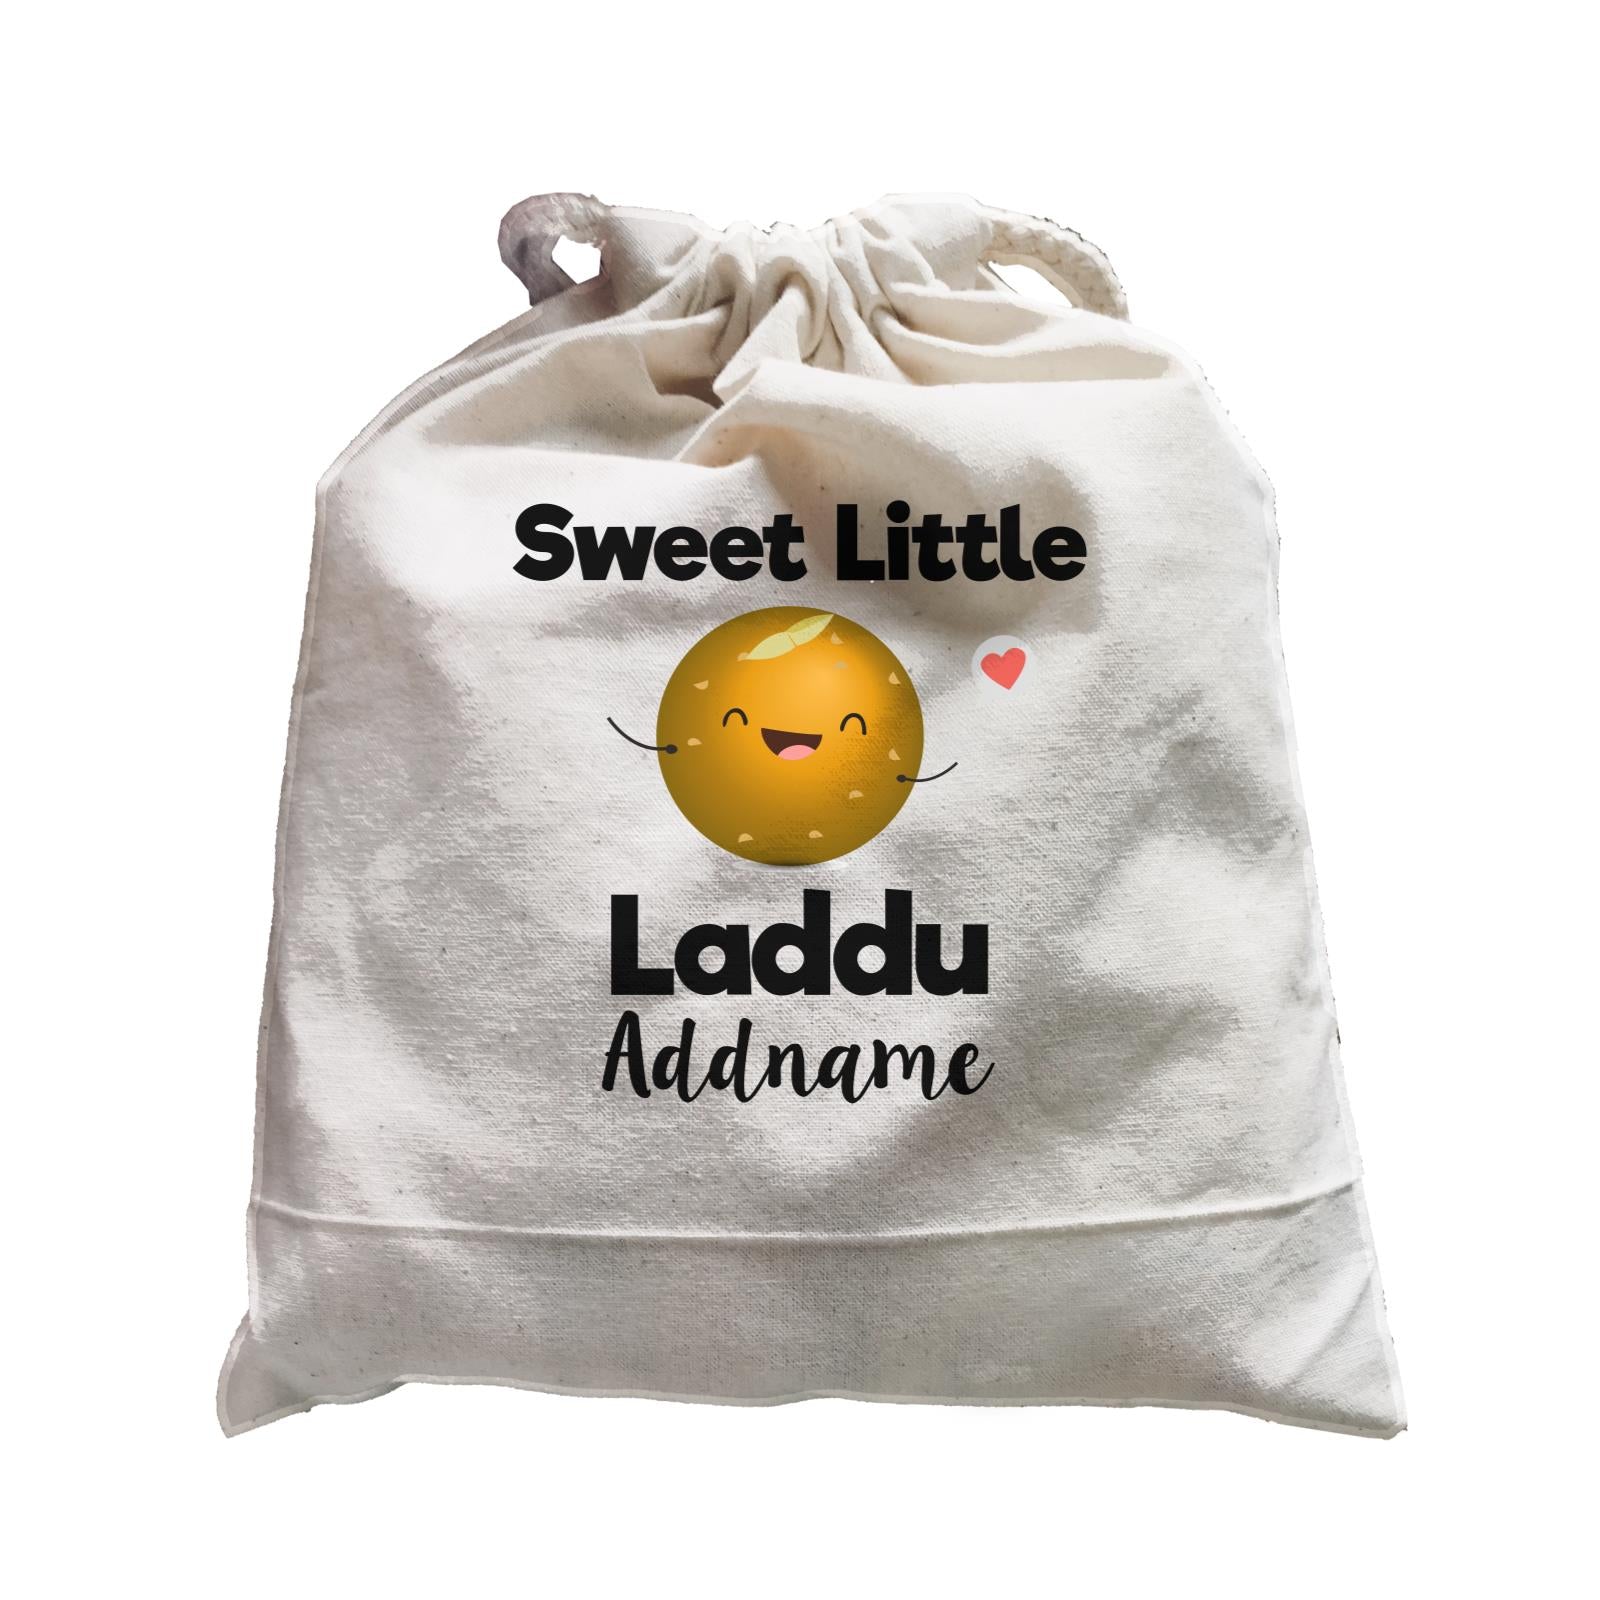 Sweet Little Laddu Addname Satchel